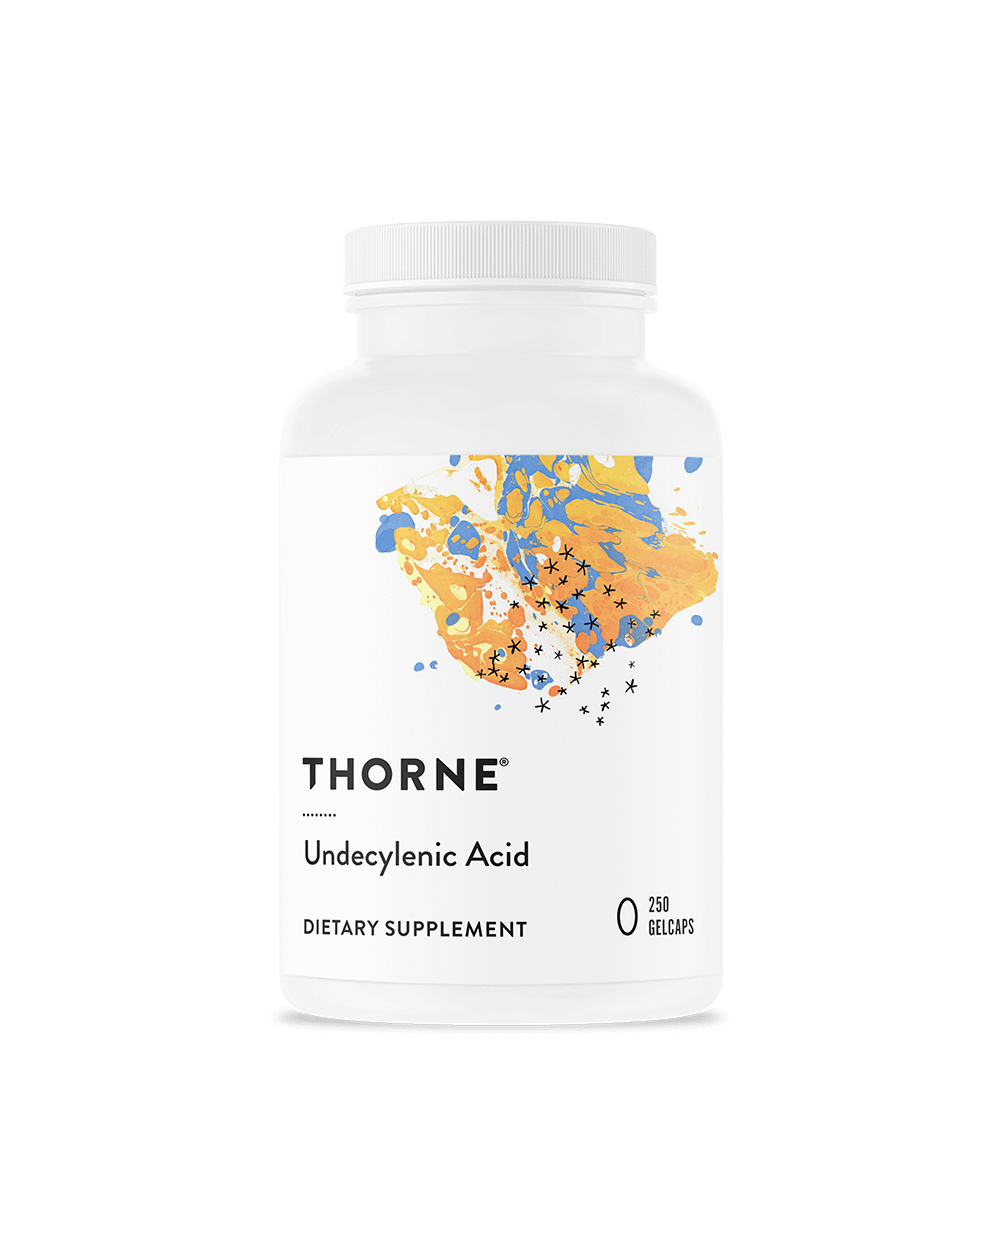 Undecylenic Acid (Thorne)